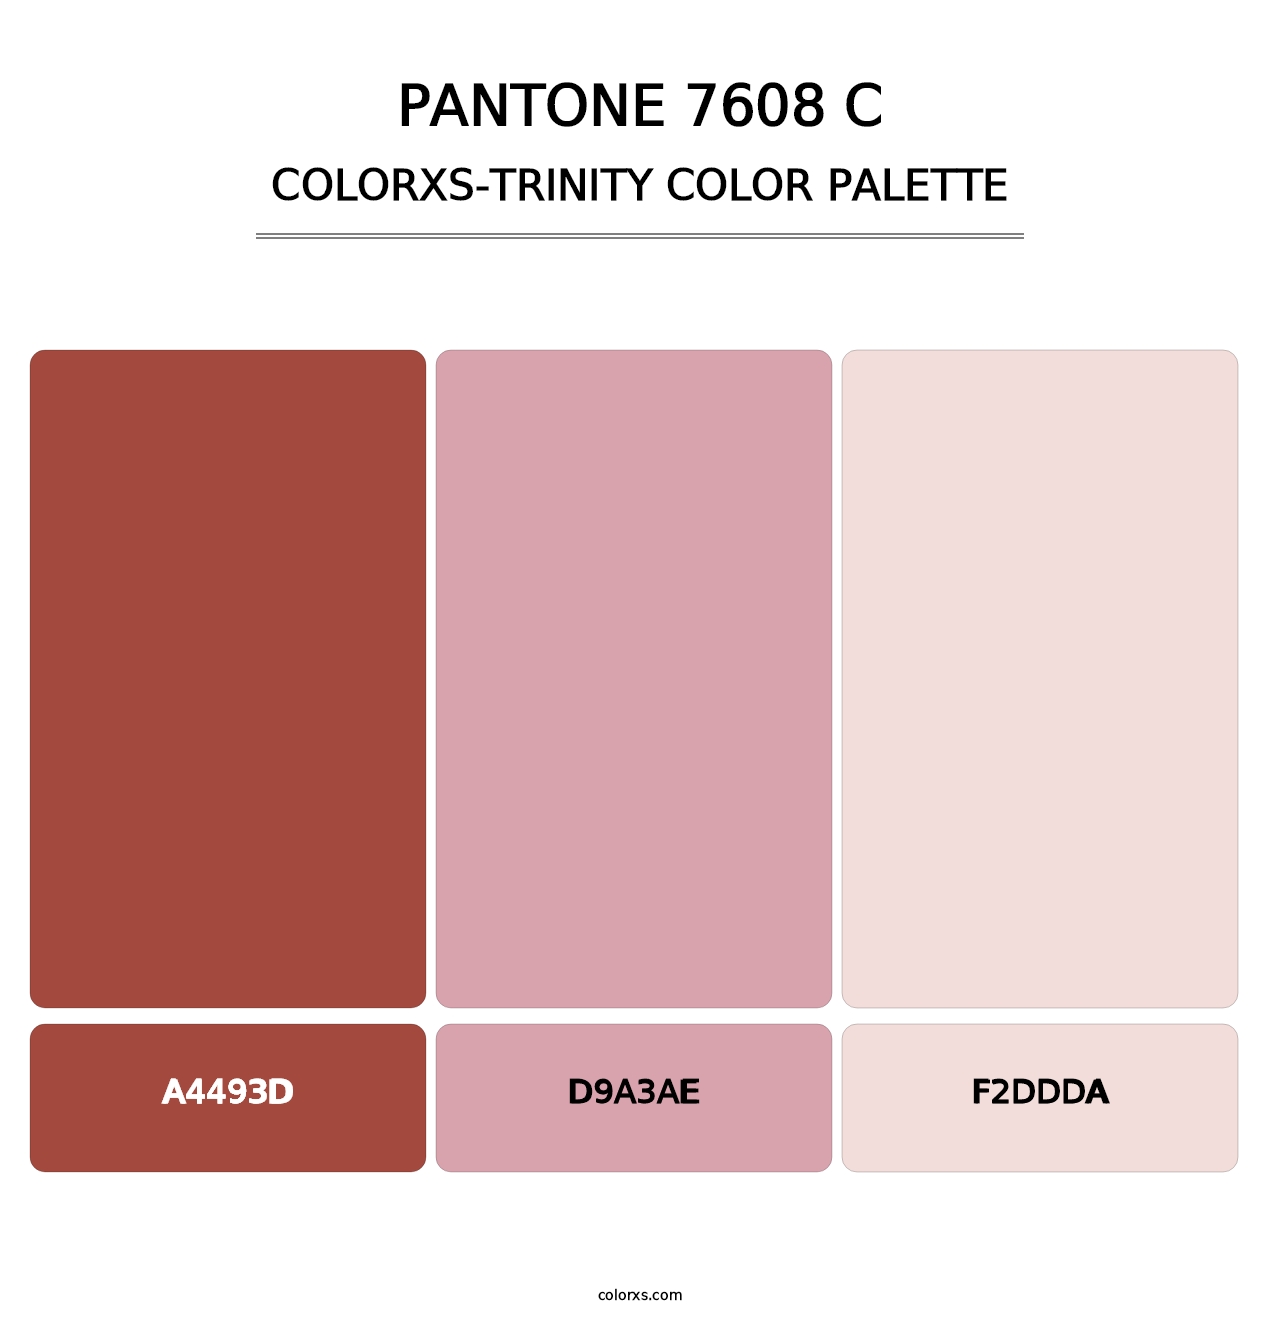 PANTONE 7608 C - Colorxs Trinity Palette